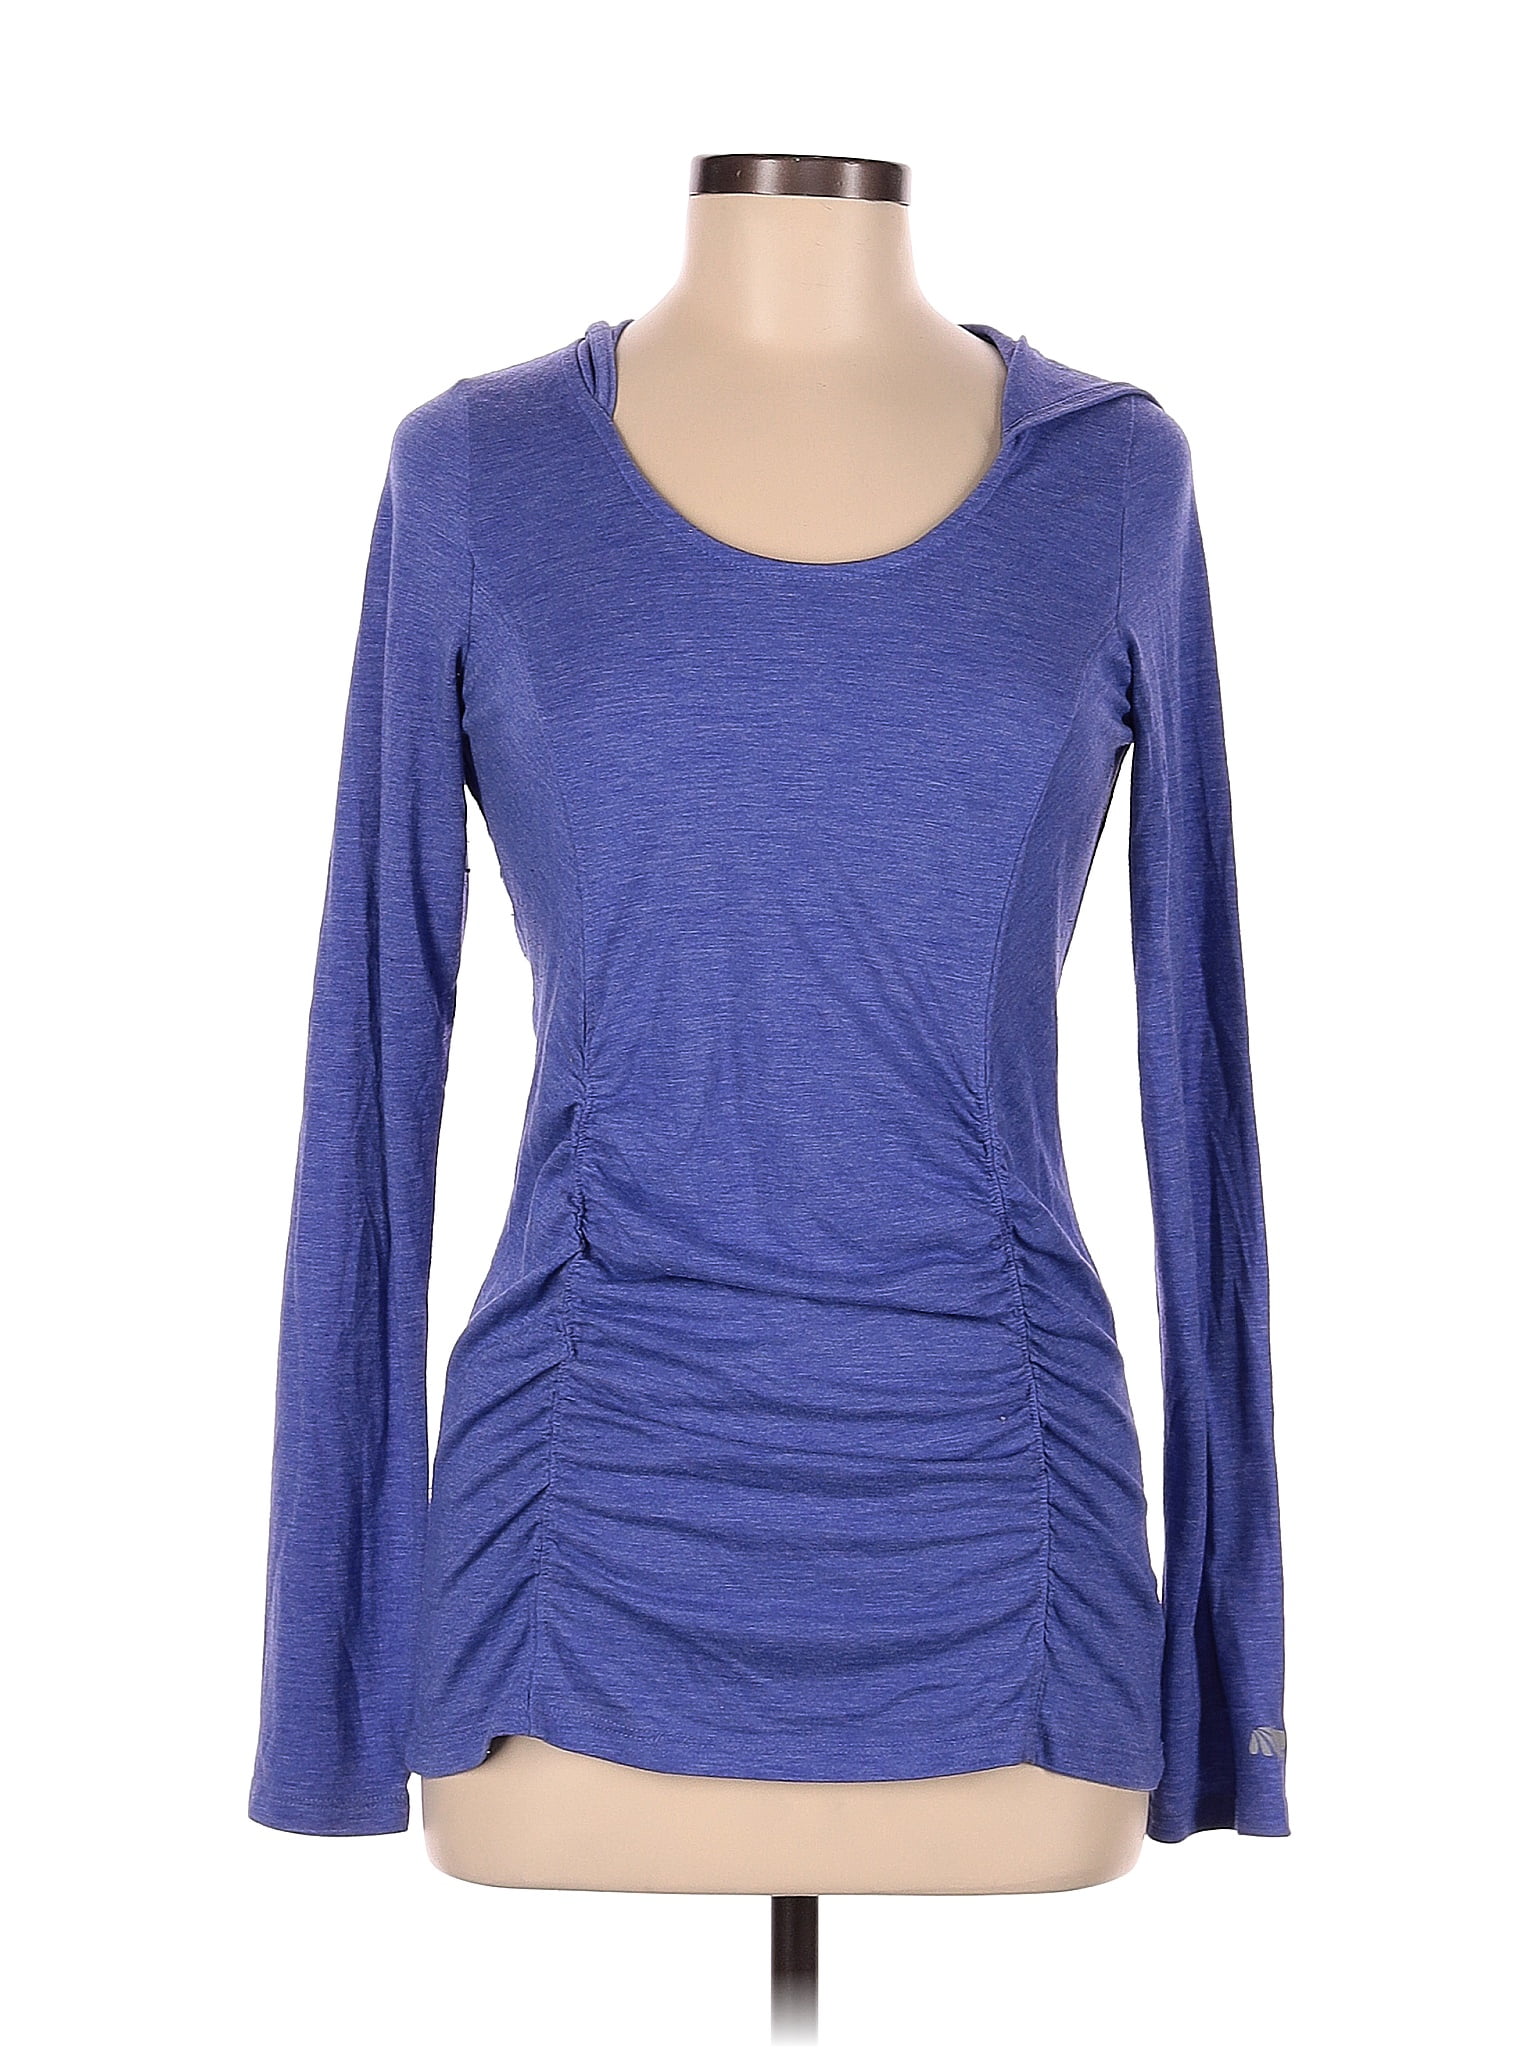 Marika Blue Long Sleeve T-Shirt Size M - 68% off